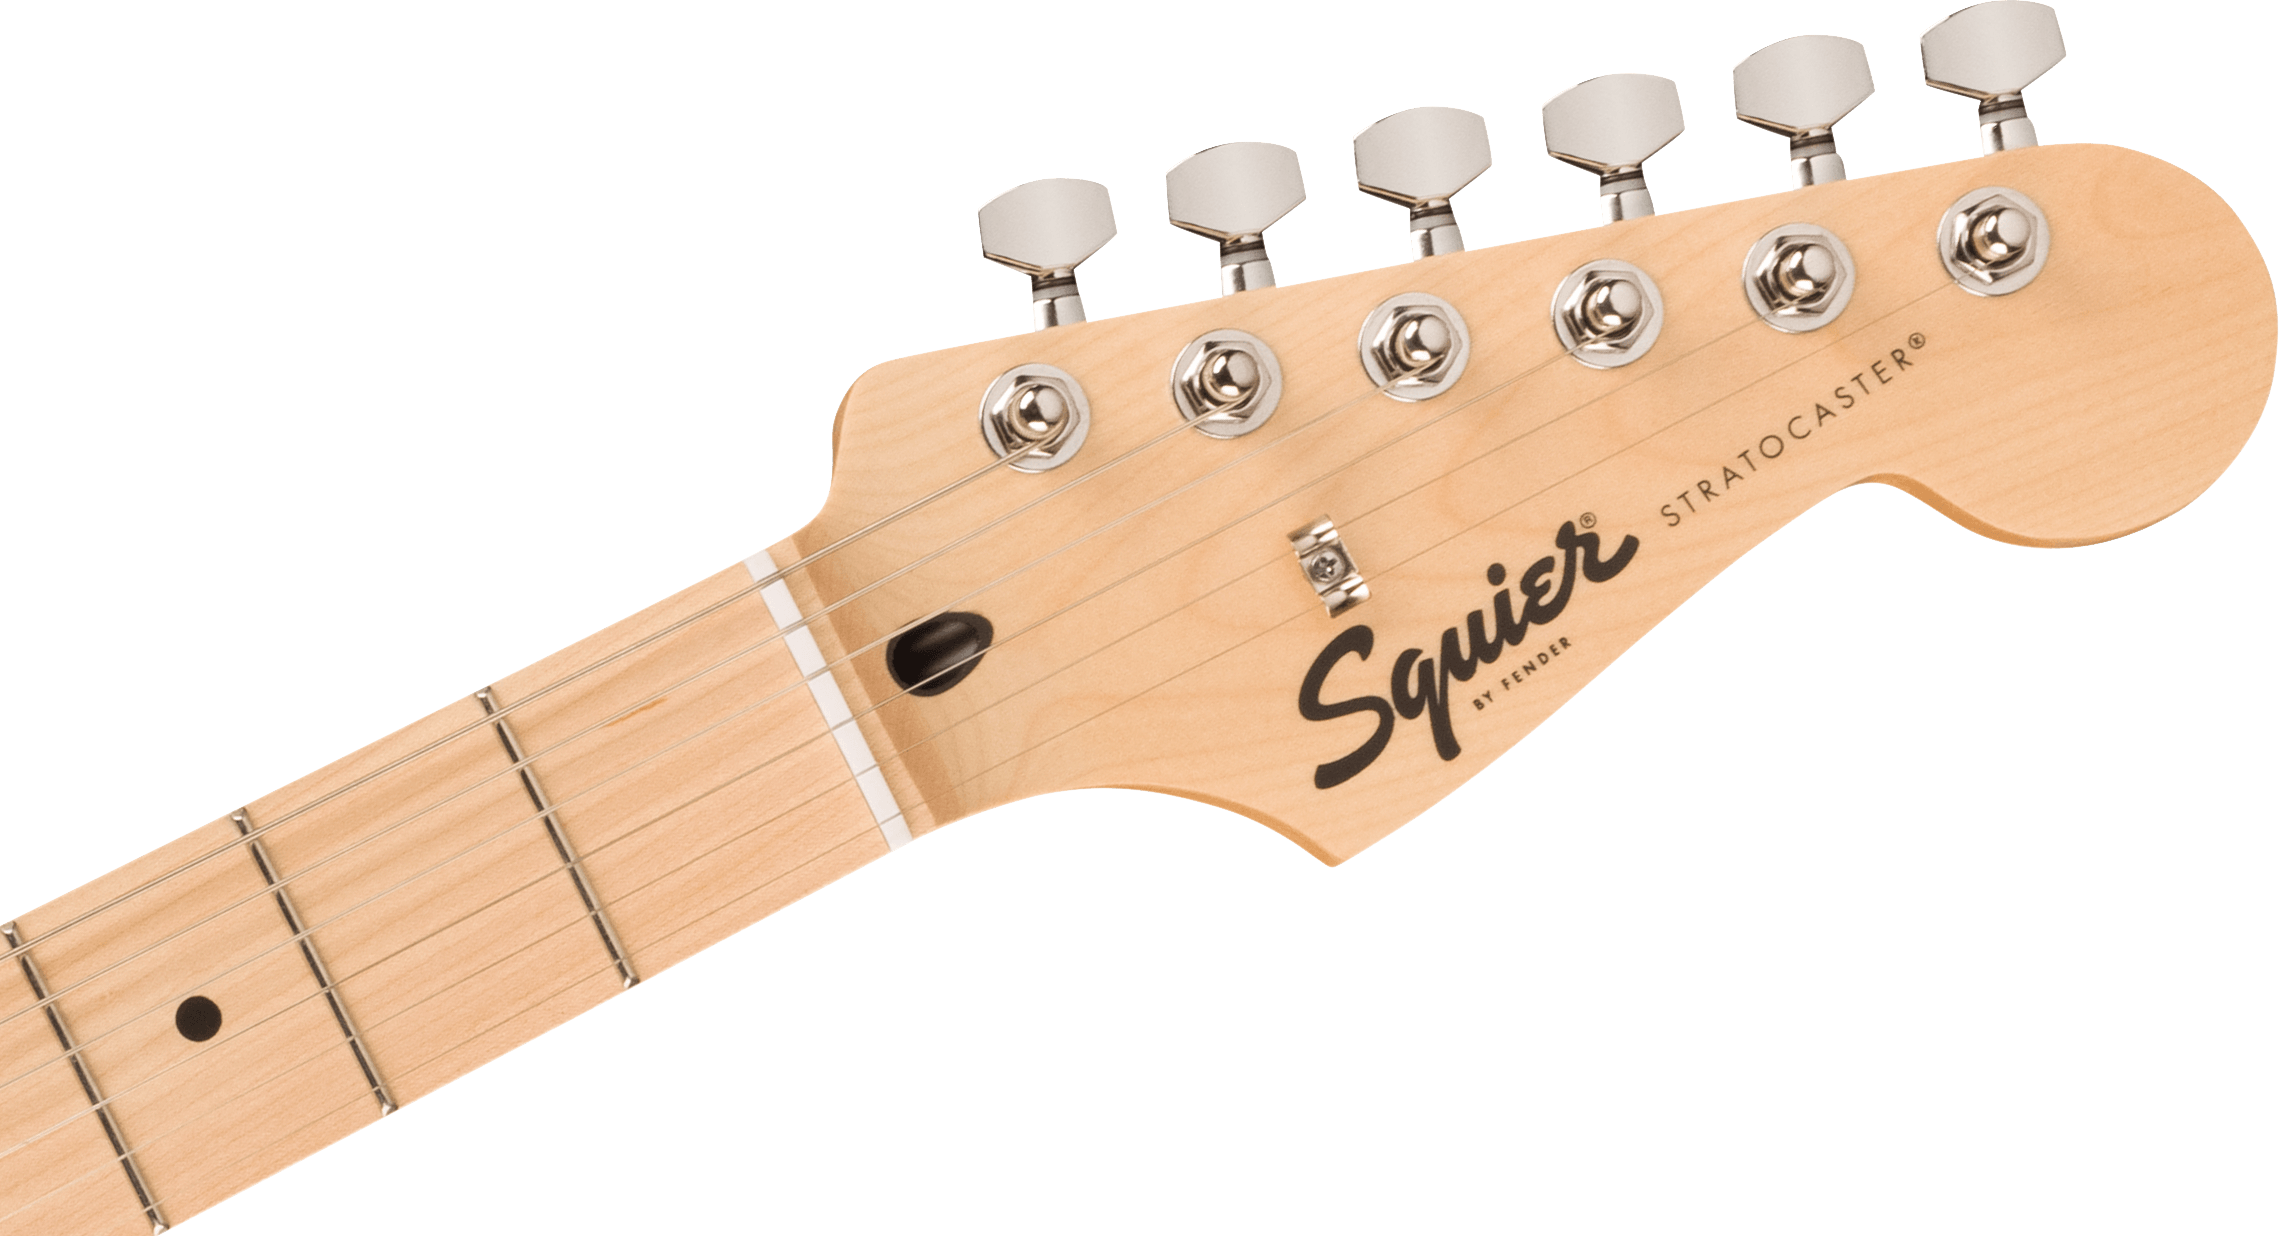 Squier FSR Squier Sonic® Stratocaster®, Maple Fingerboard, White Pickguard, Surf Green